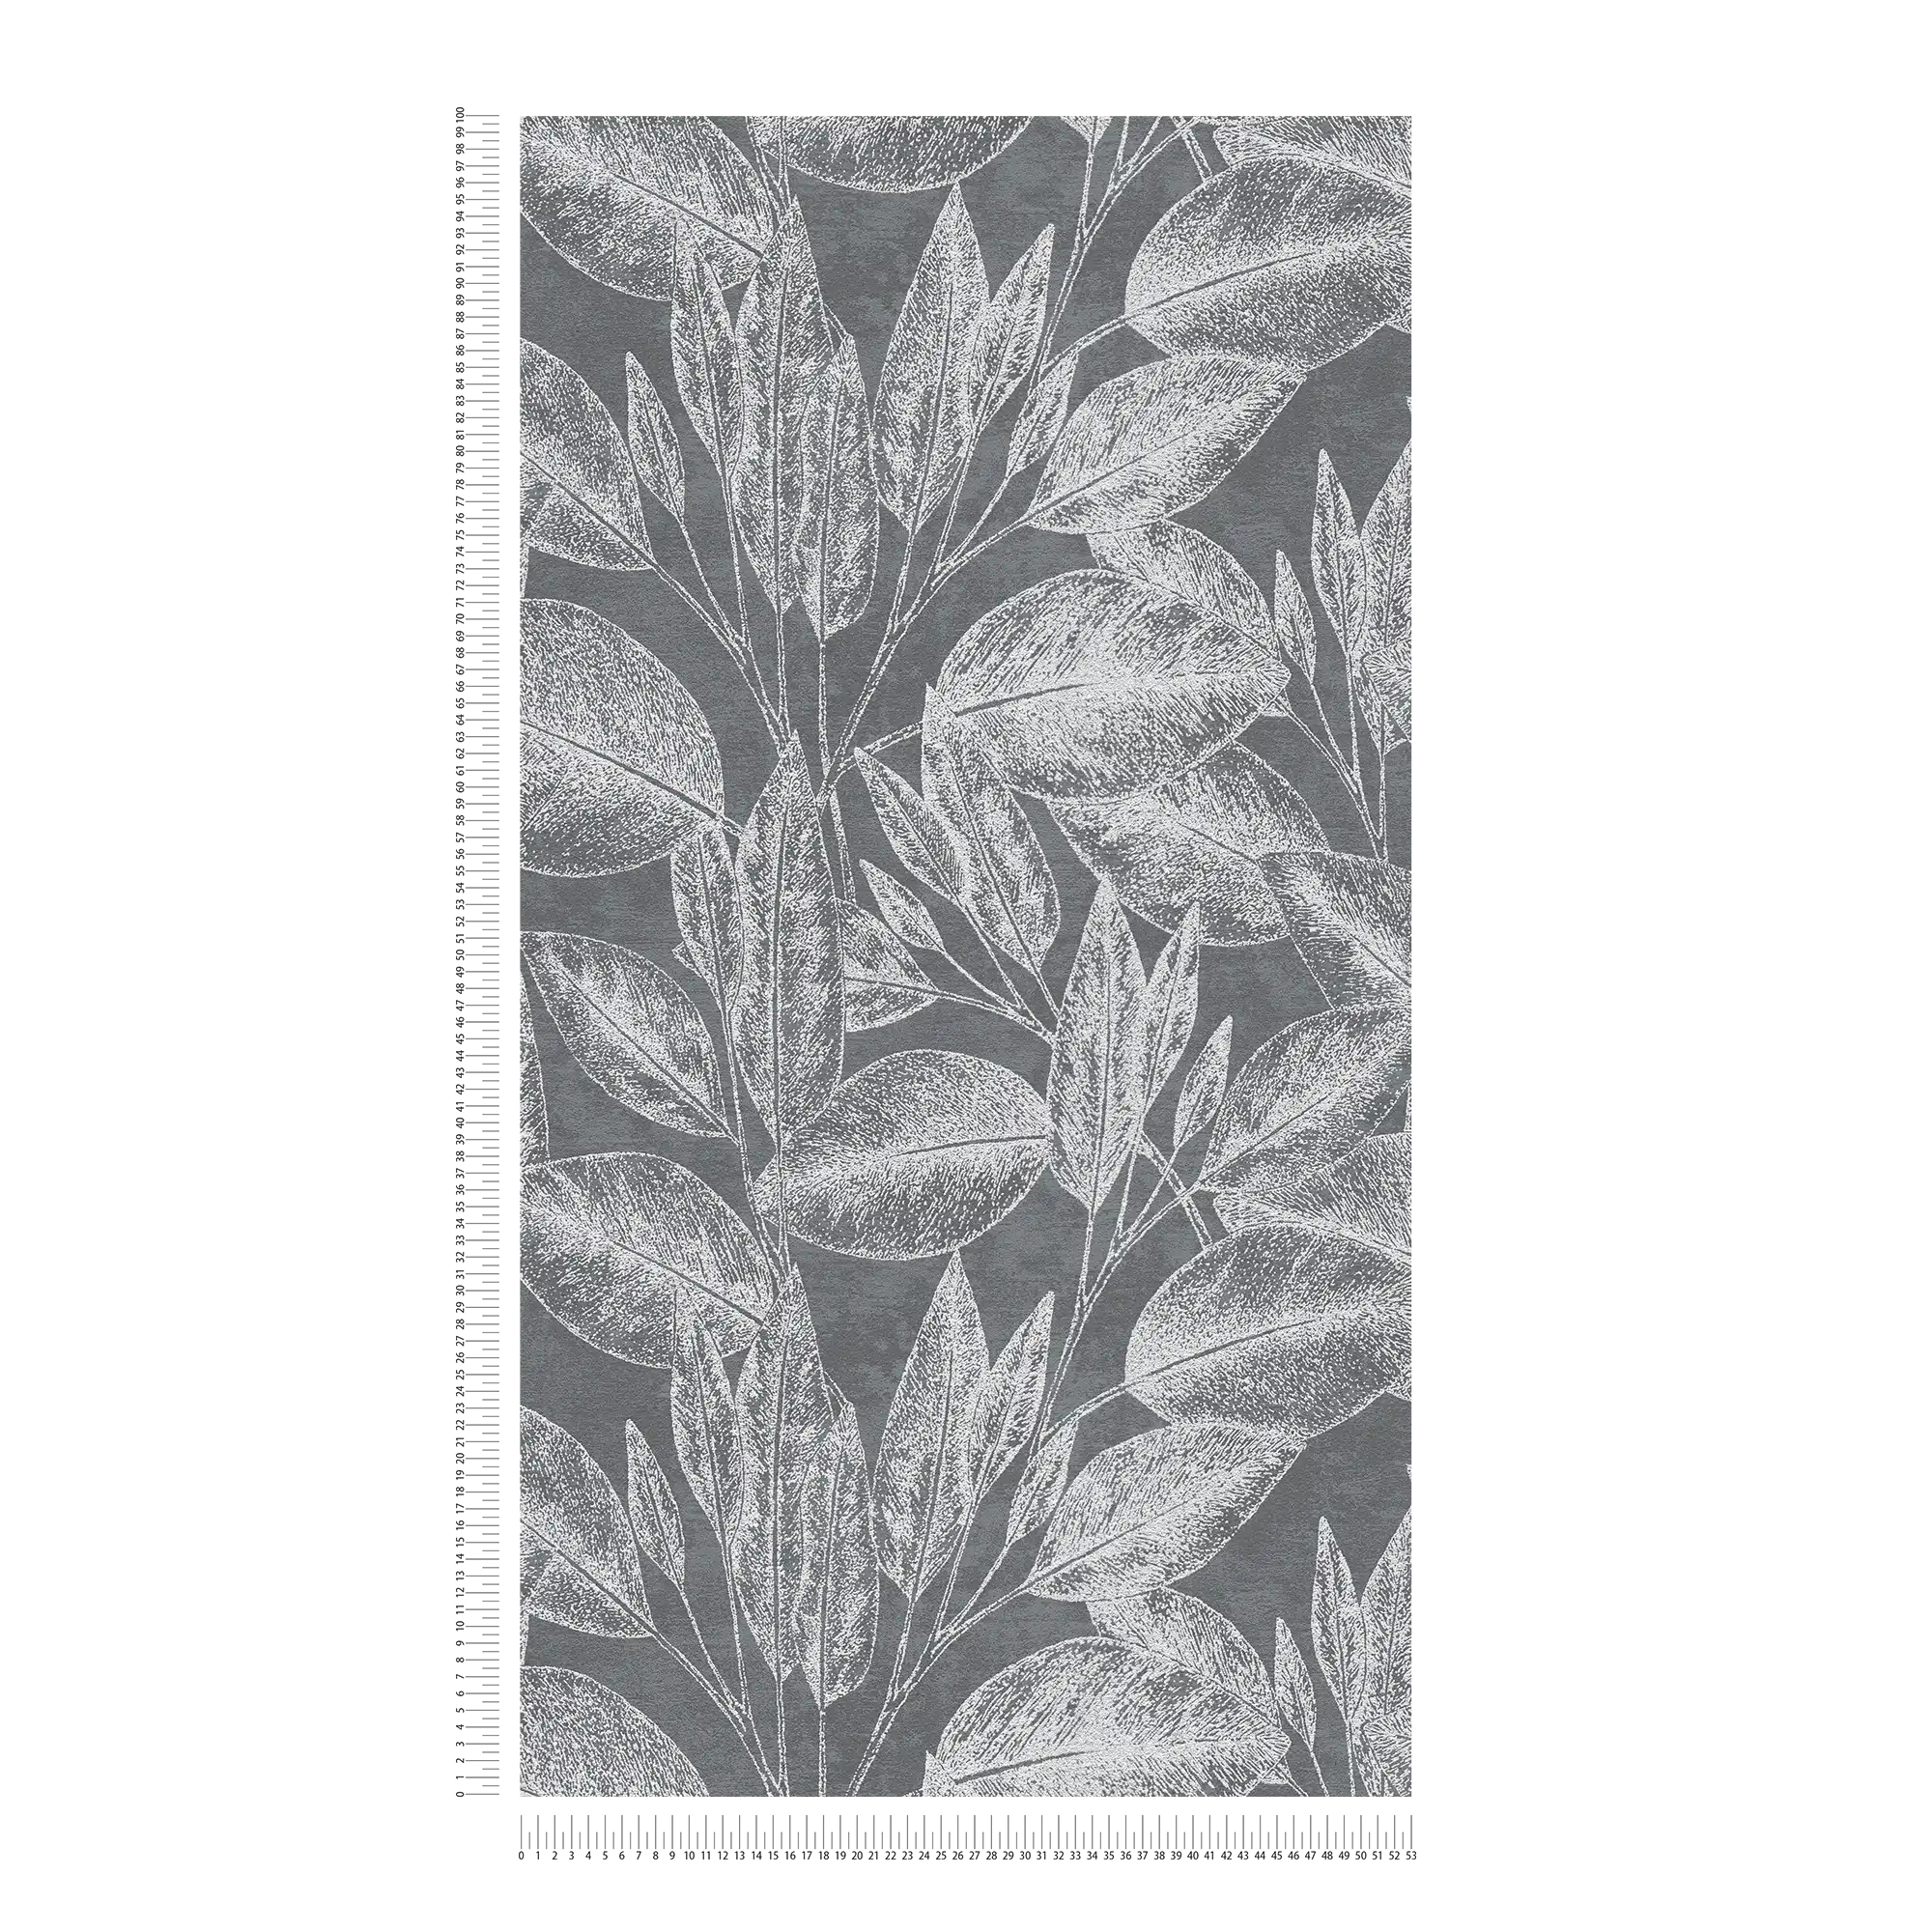             Leaves wallpaper lines art - Black, Metallic
        